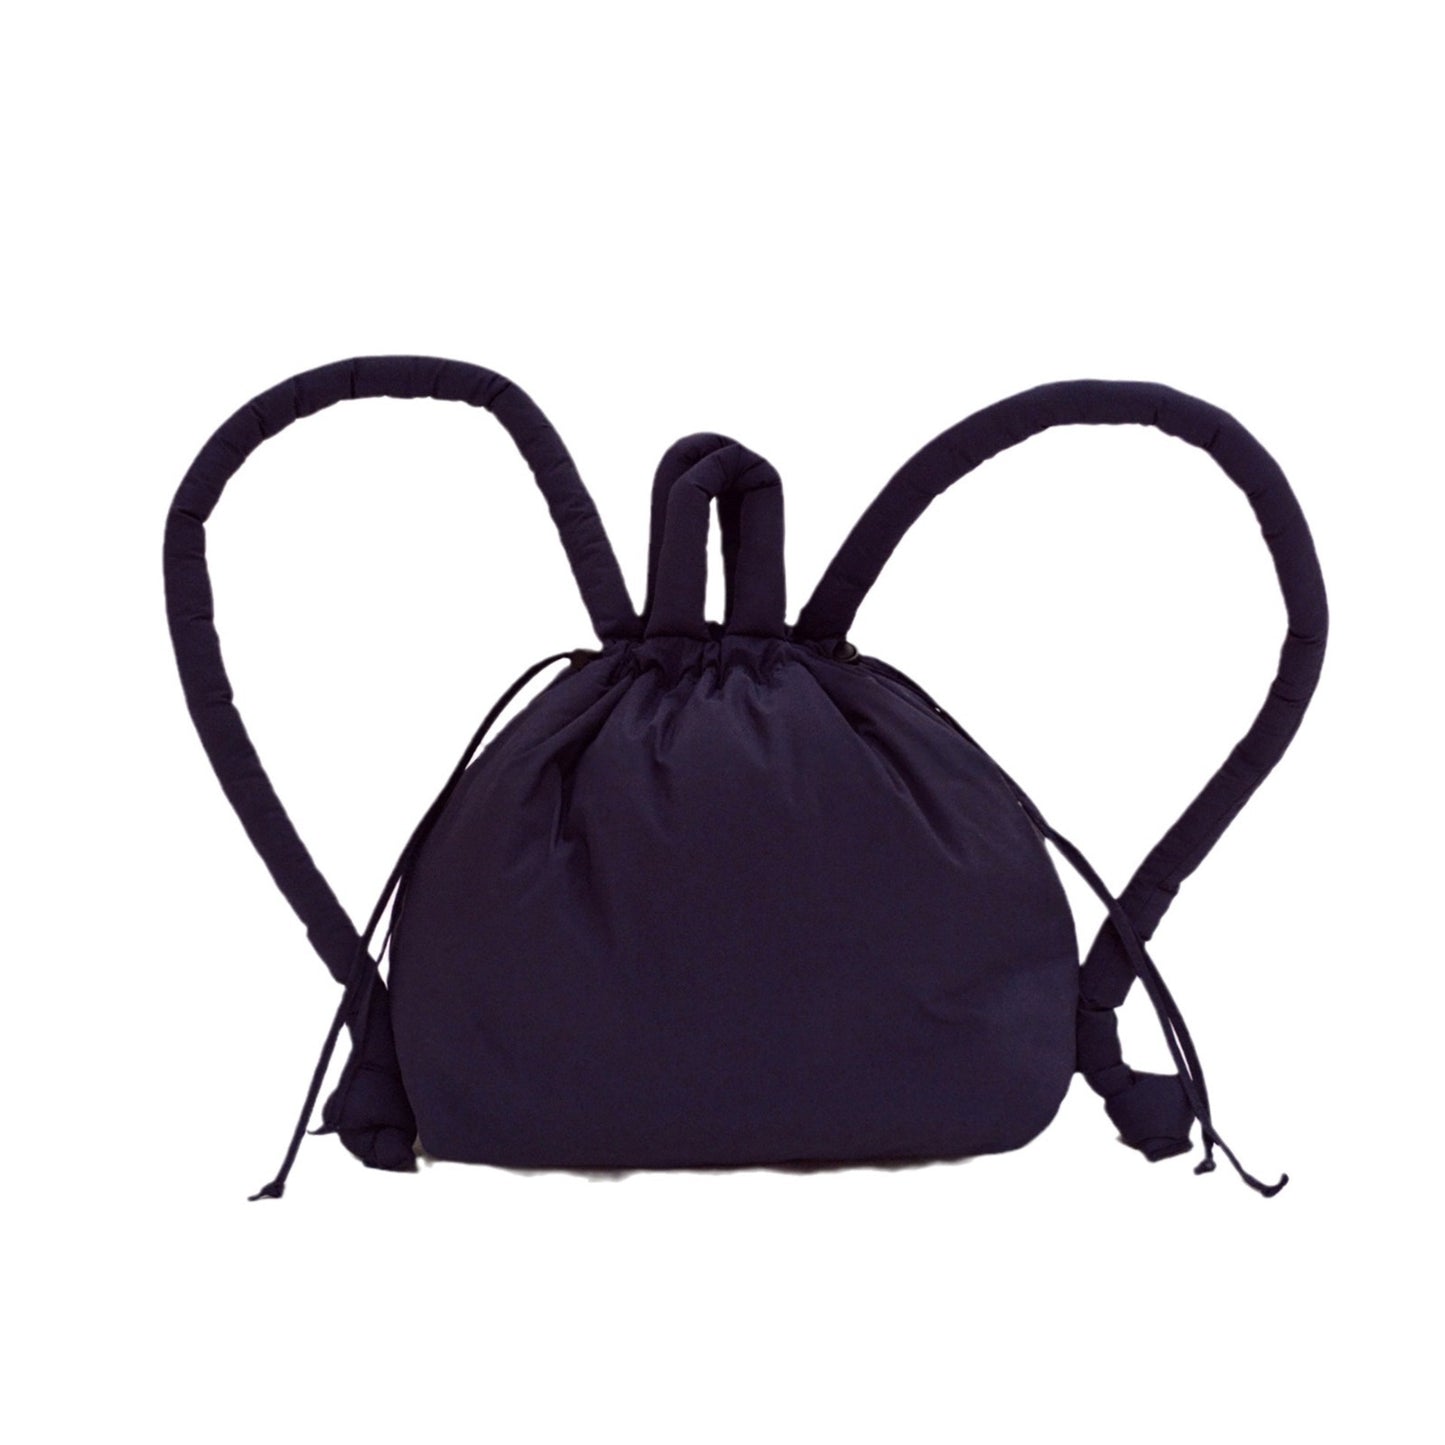 Dark-gray-nylon-shoulder-bag-with-European-retro-style-elements